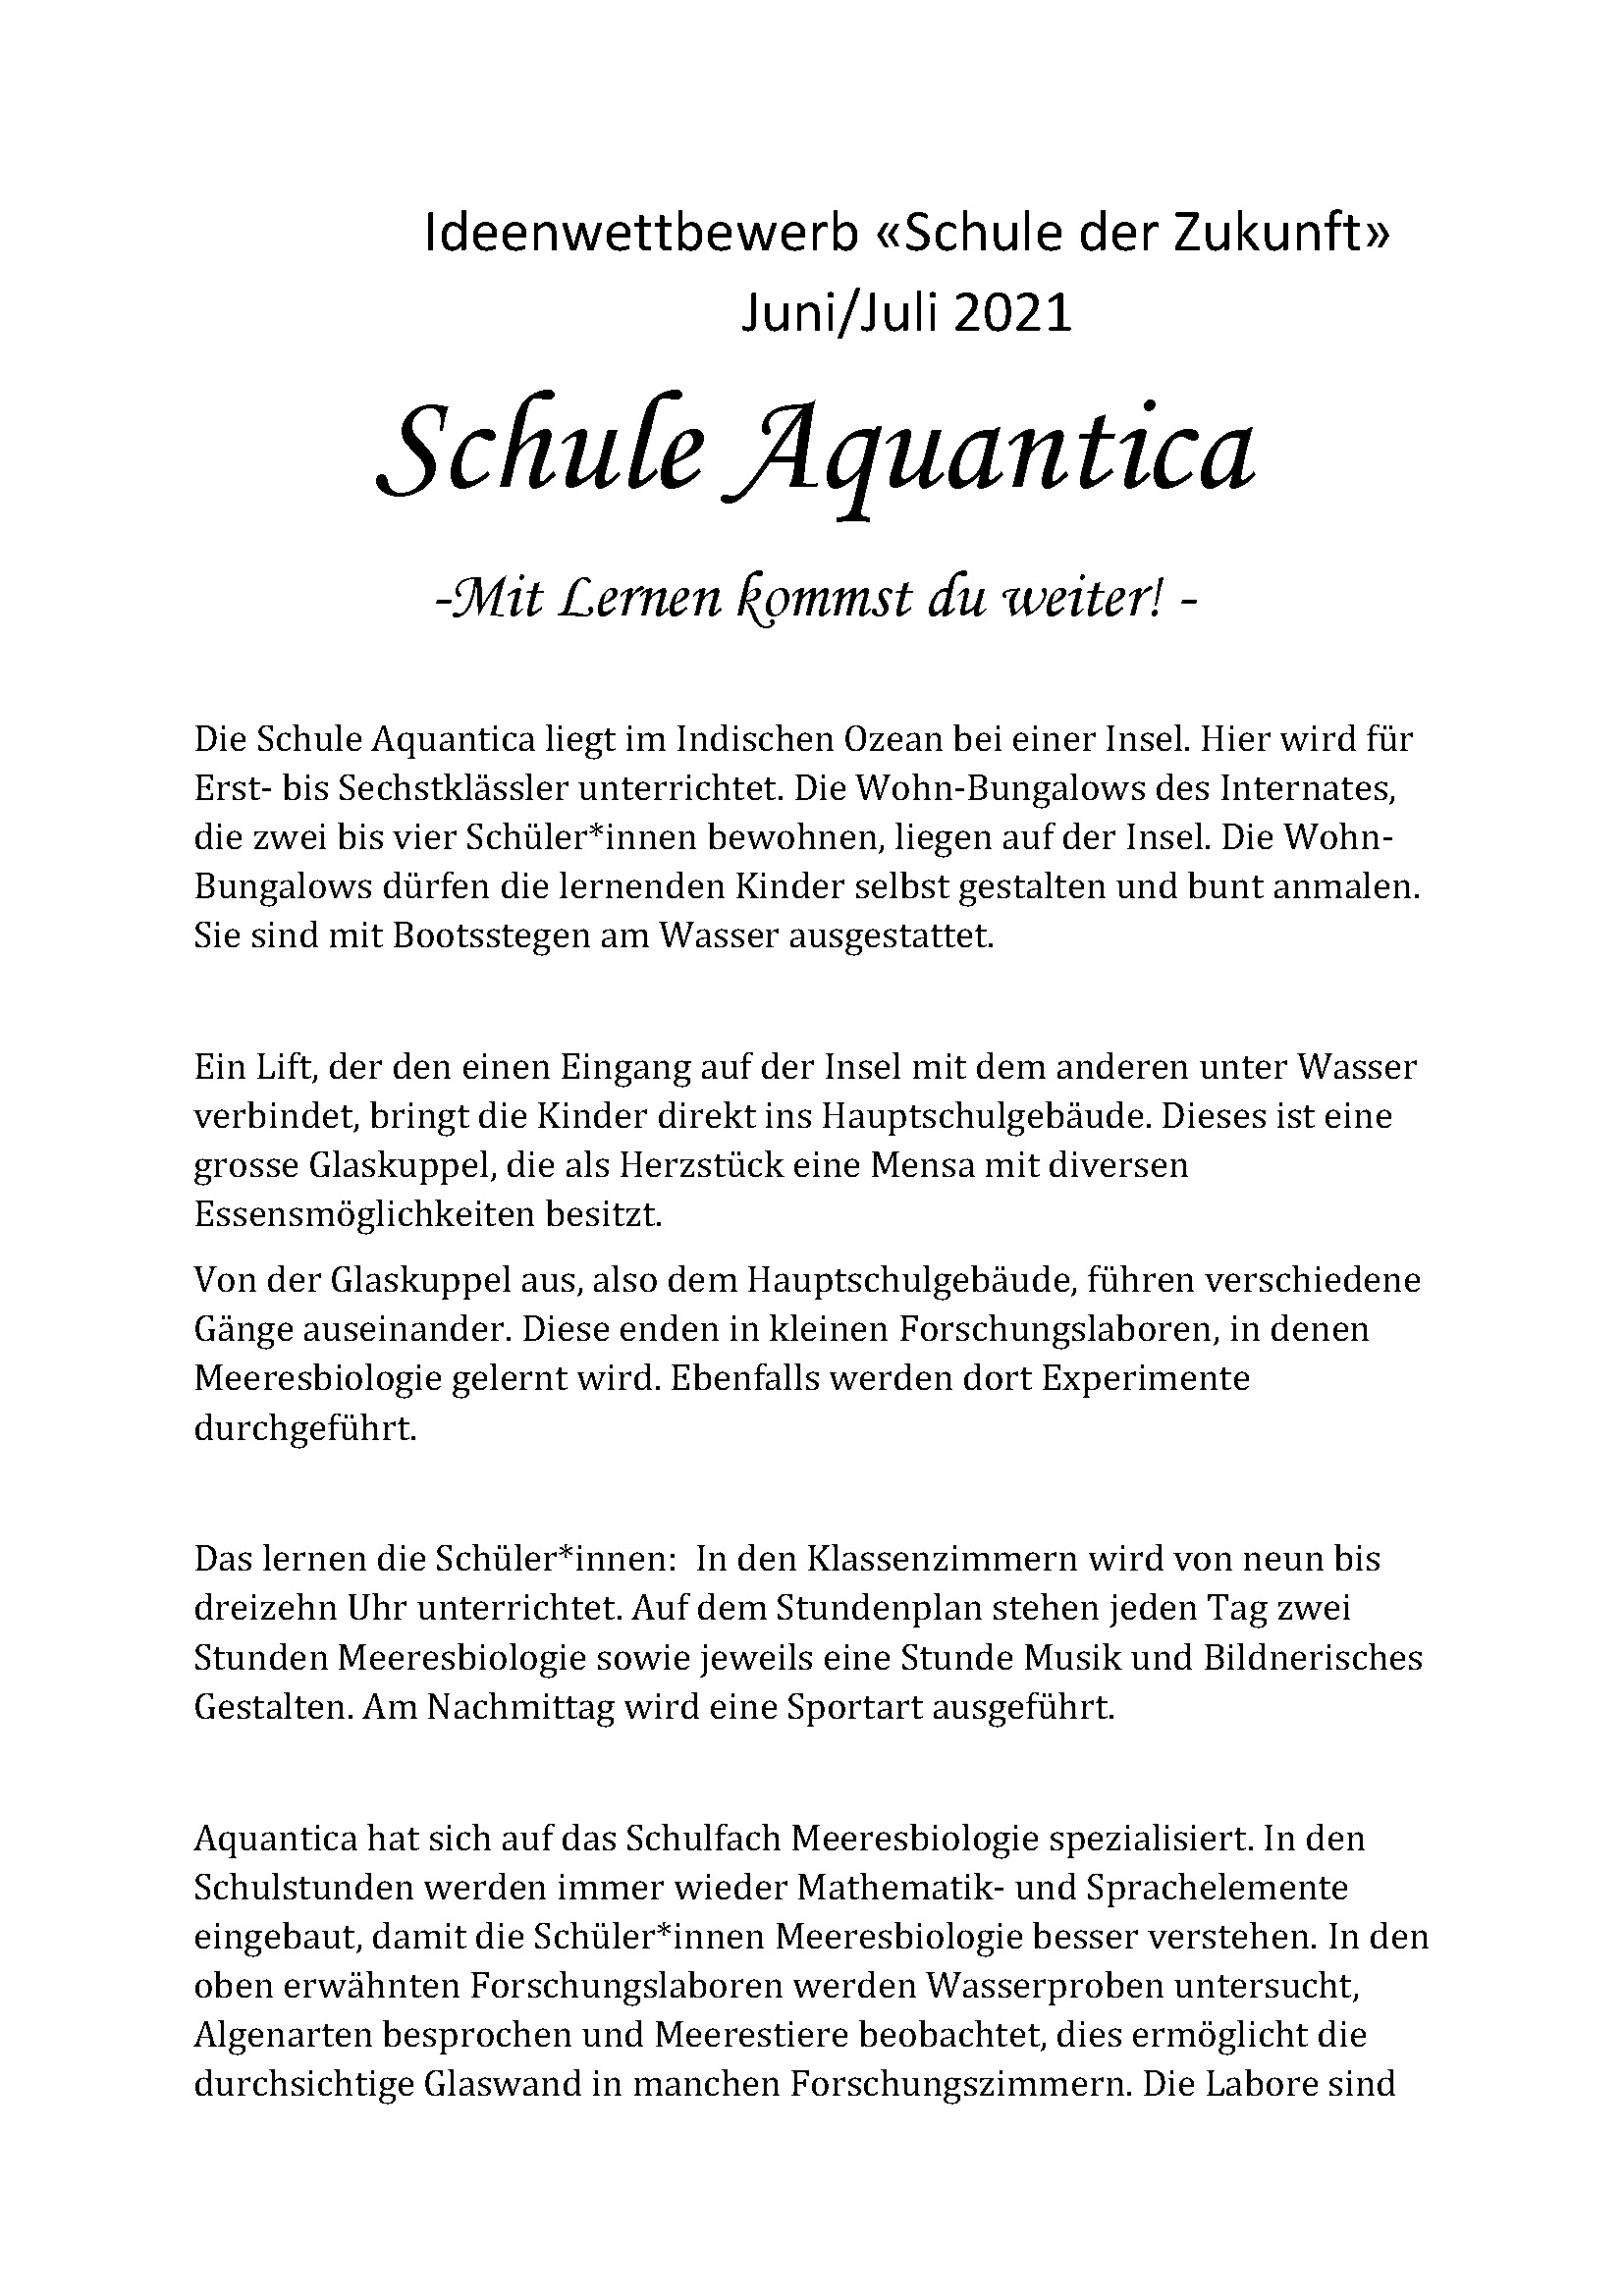 Aquantica_Page_1